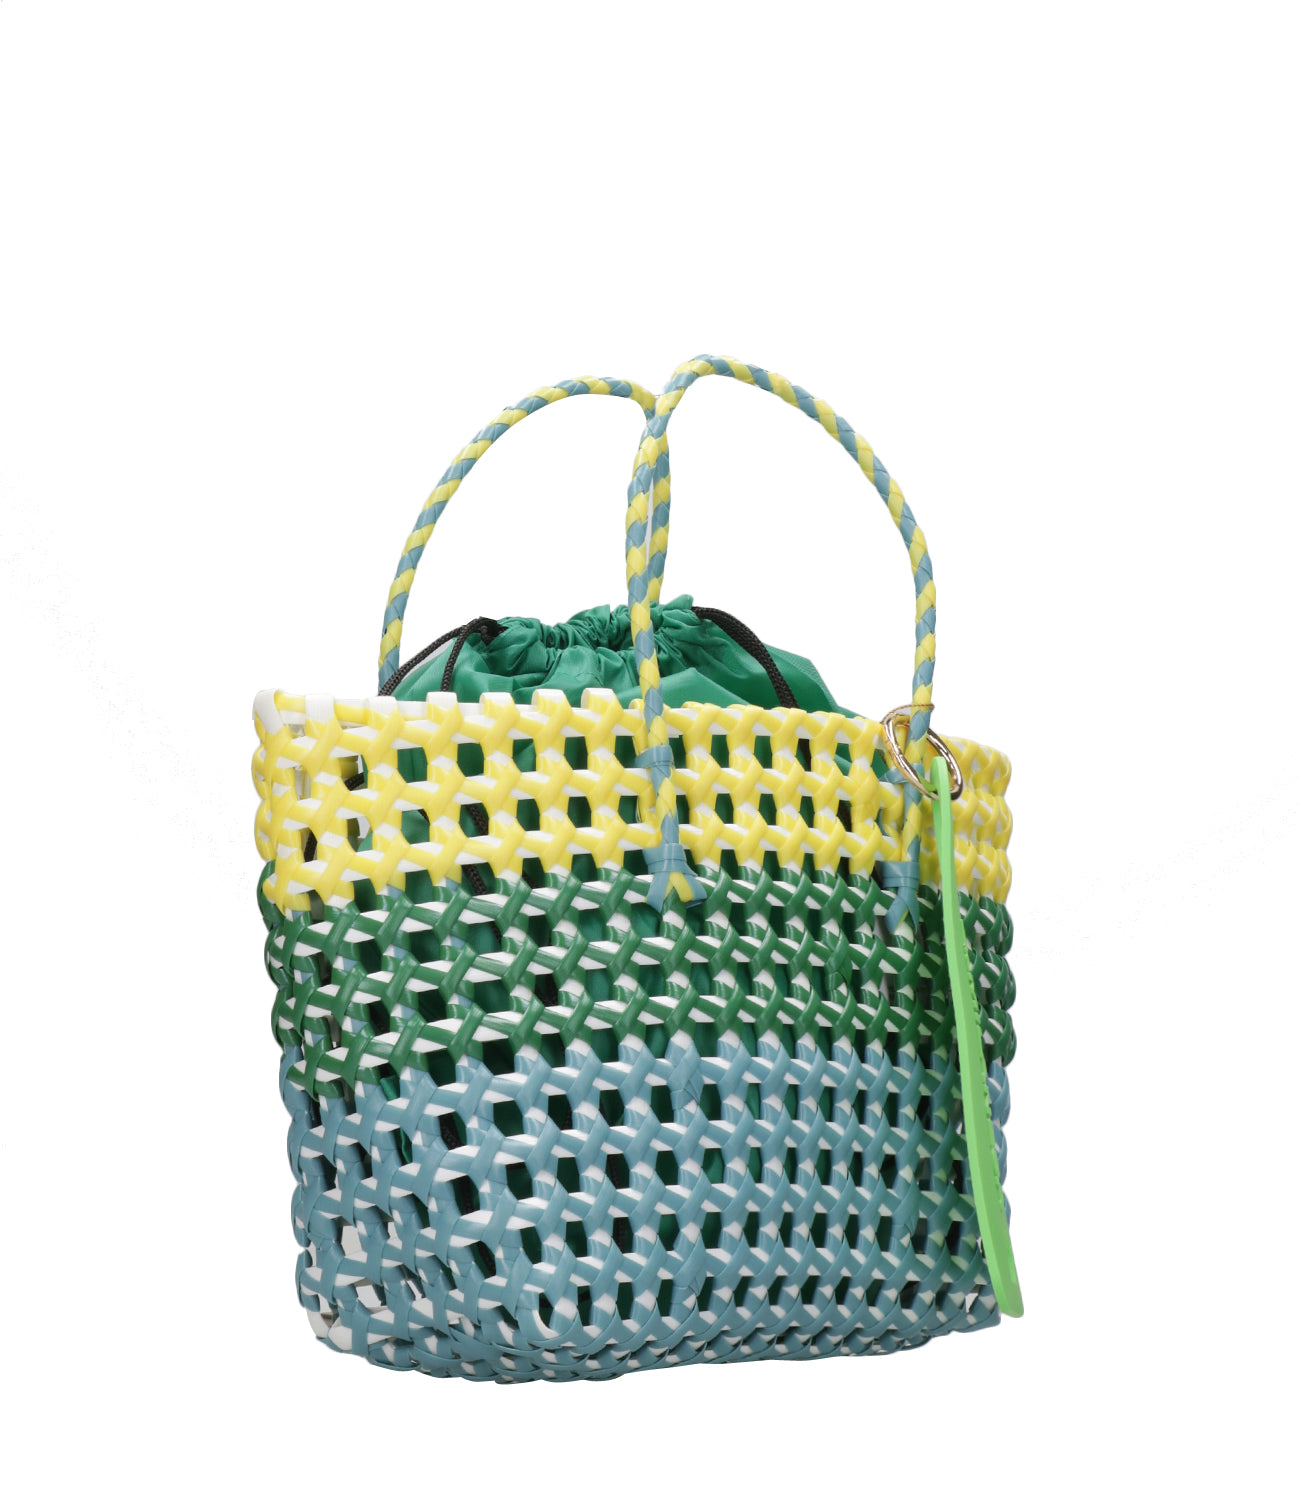 La Milanesa | Negroni Bag Small Light Blue Green and Yellow